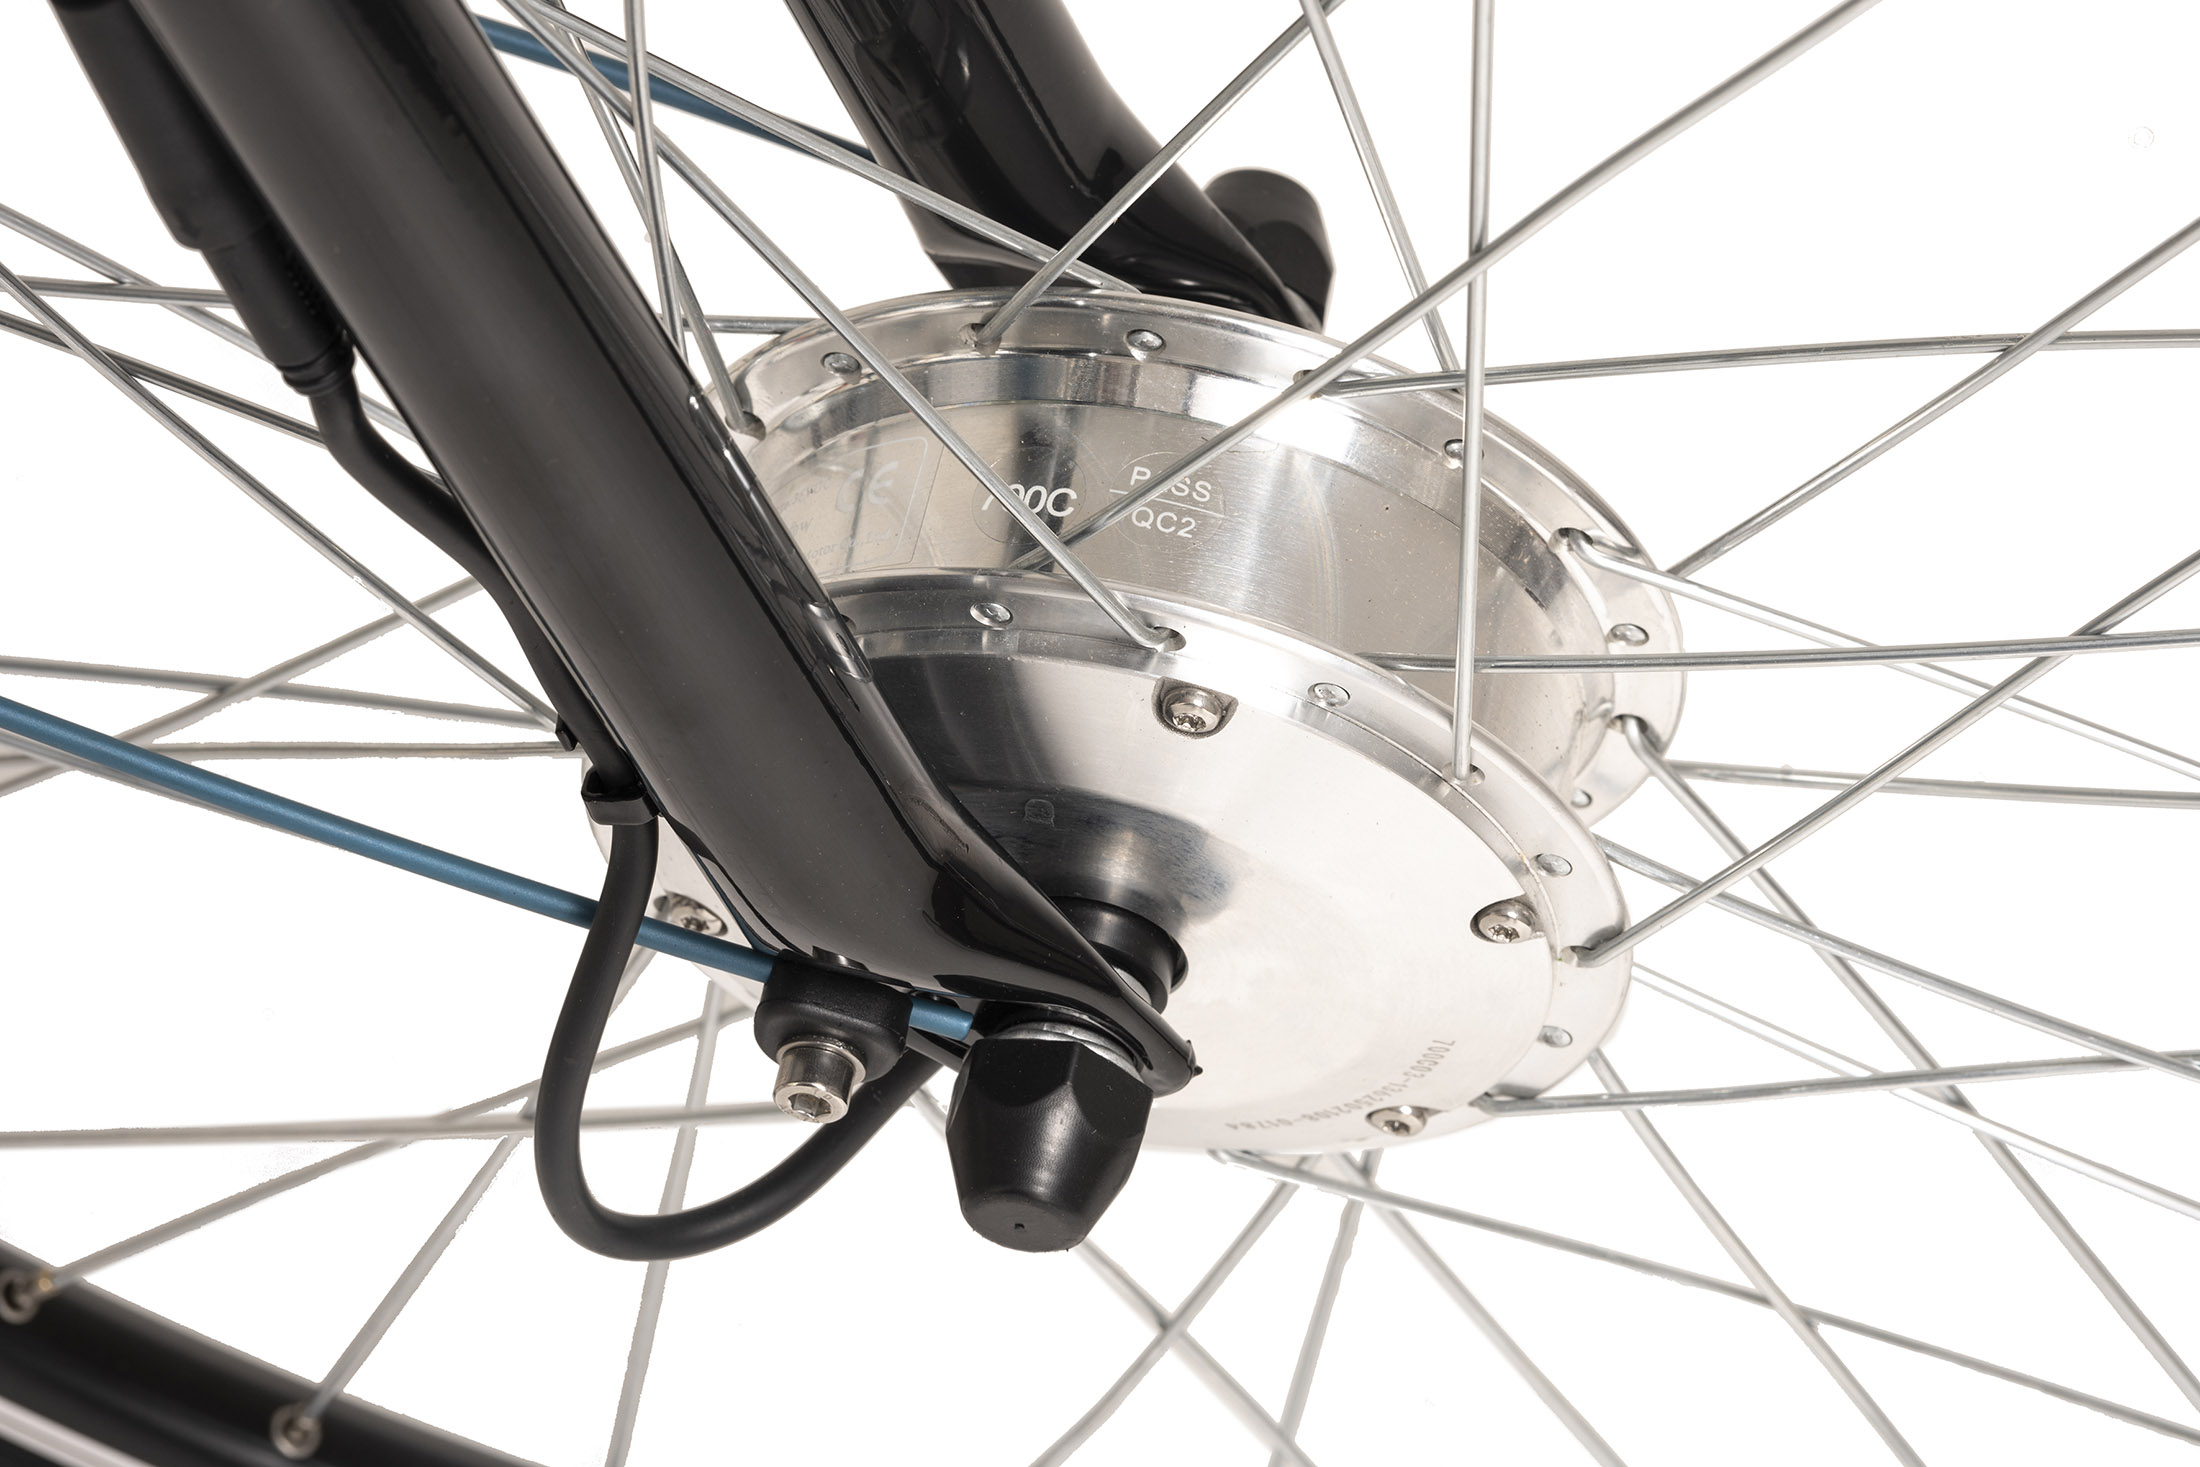 Wh, Lido Zoll, Blau) 468 49 cm, (Laufradgröße: ADORE Rahmenhöhe: Unisex-Rad, 28 Citybike